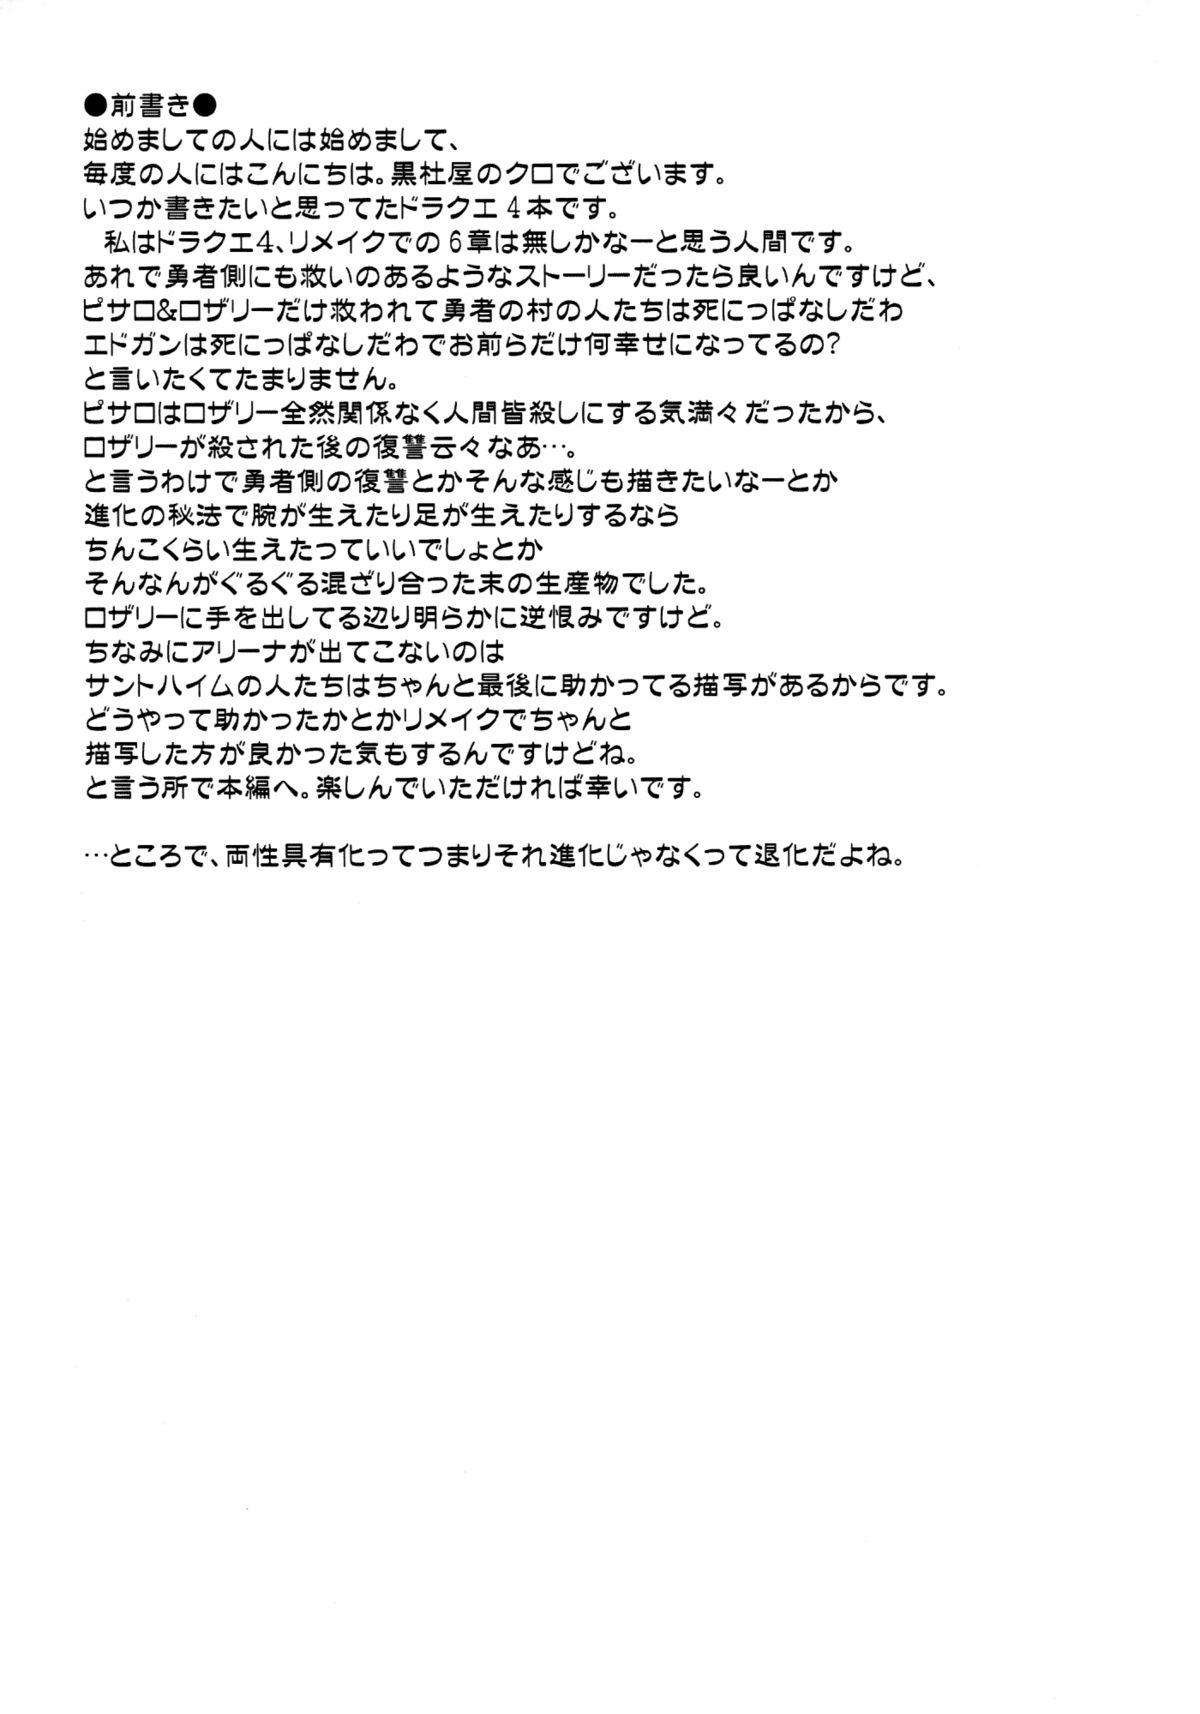 Tied Shinka no Hihou de Asobou! - Dragon quest iv Mas - Page 3